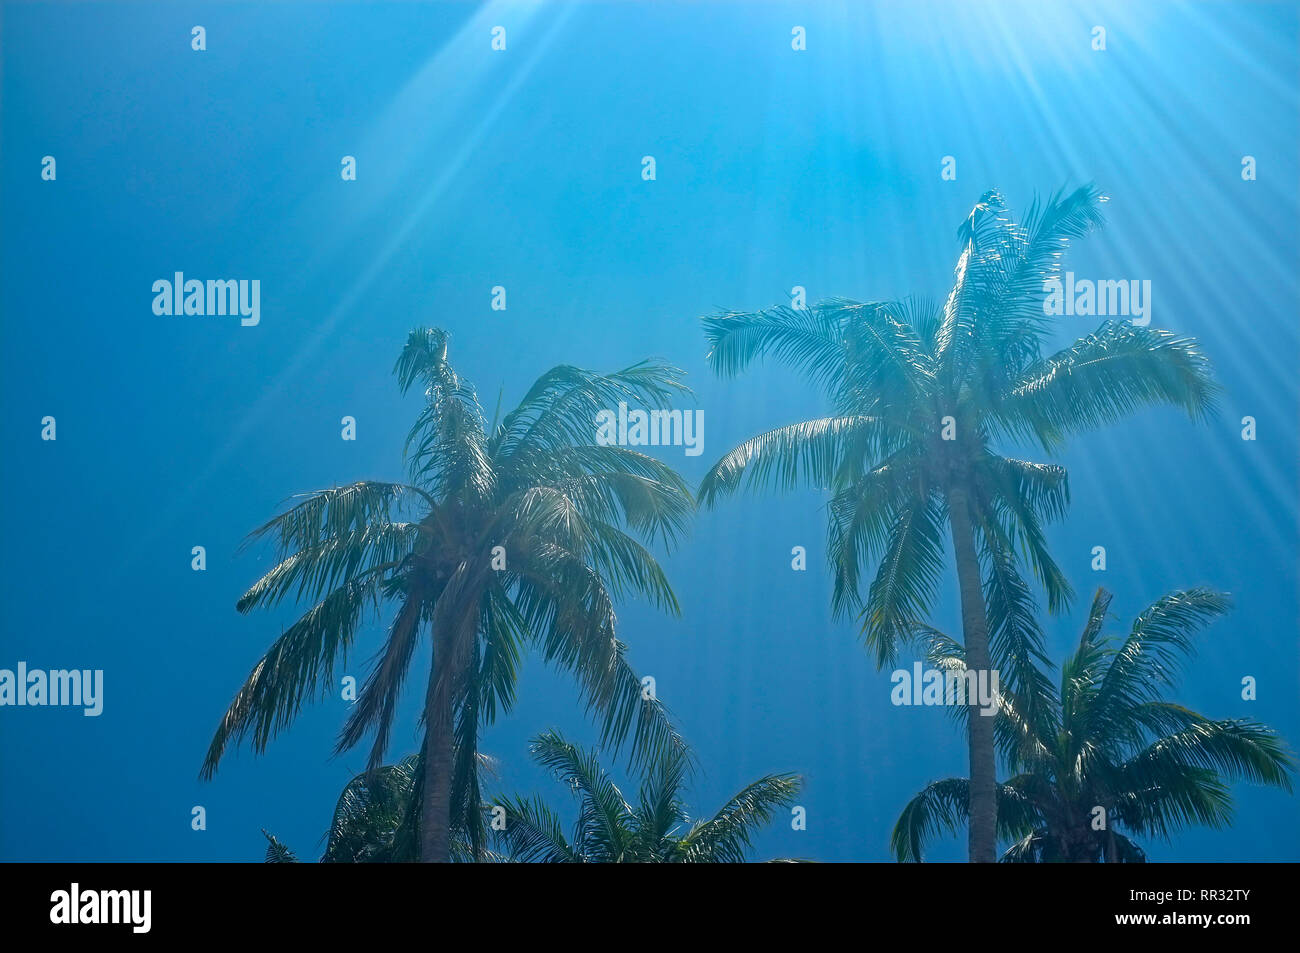 Palmen vor blauem Himmel mit Sonne Flare. Stockfoto